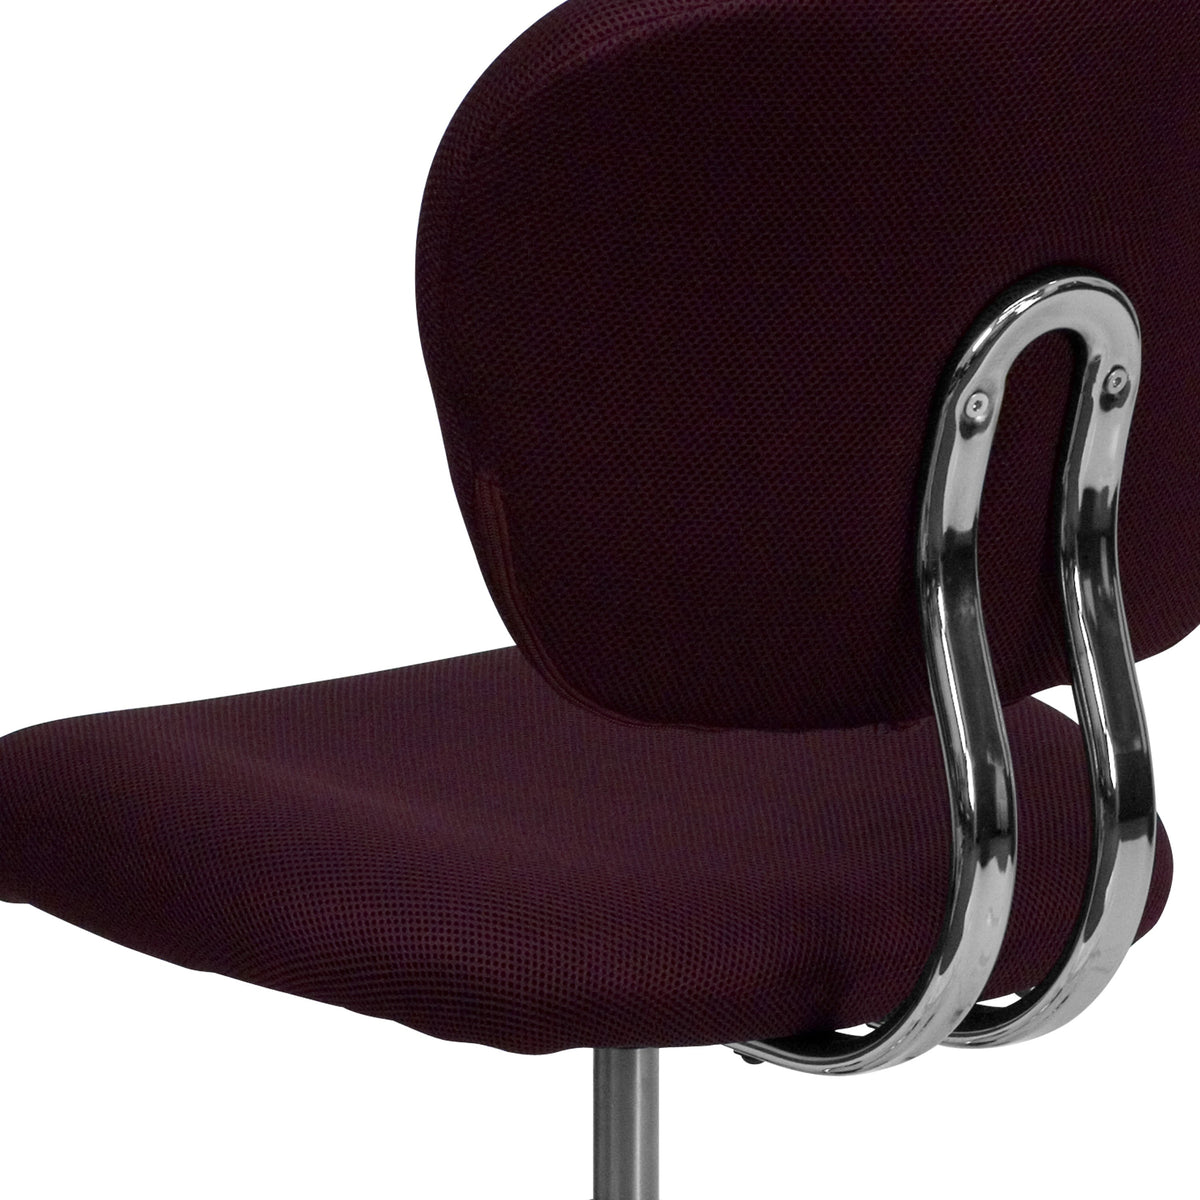 Burgundy |#| Mid-Back Burgundy Mesh Padded Swivel Task Office Chair with Chrome Base